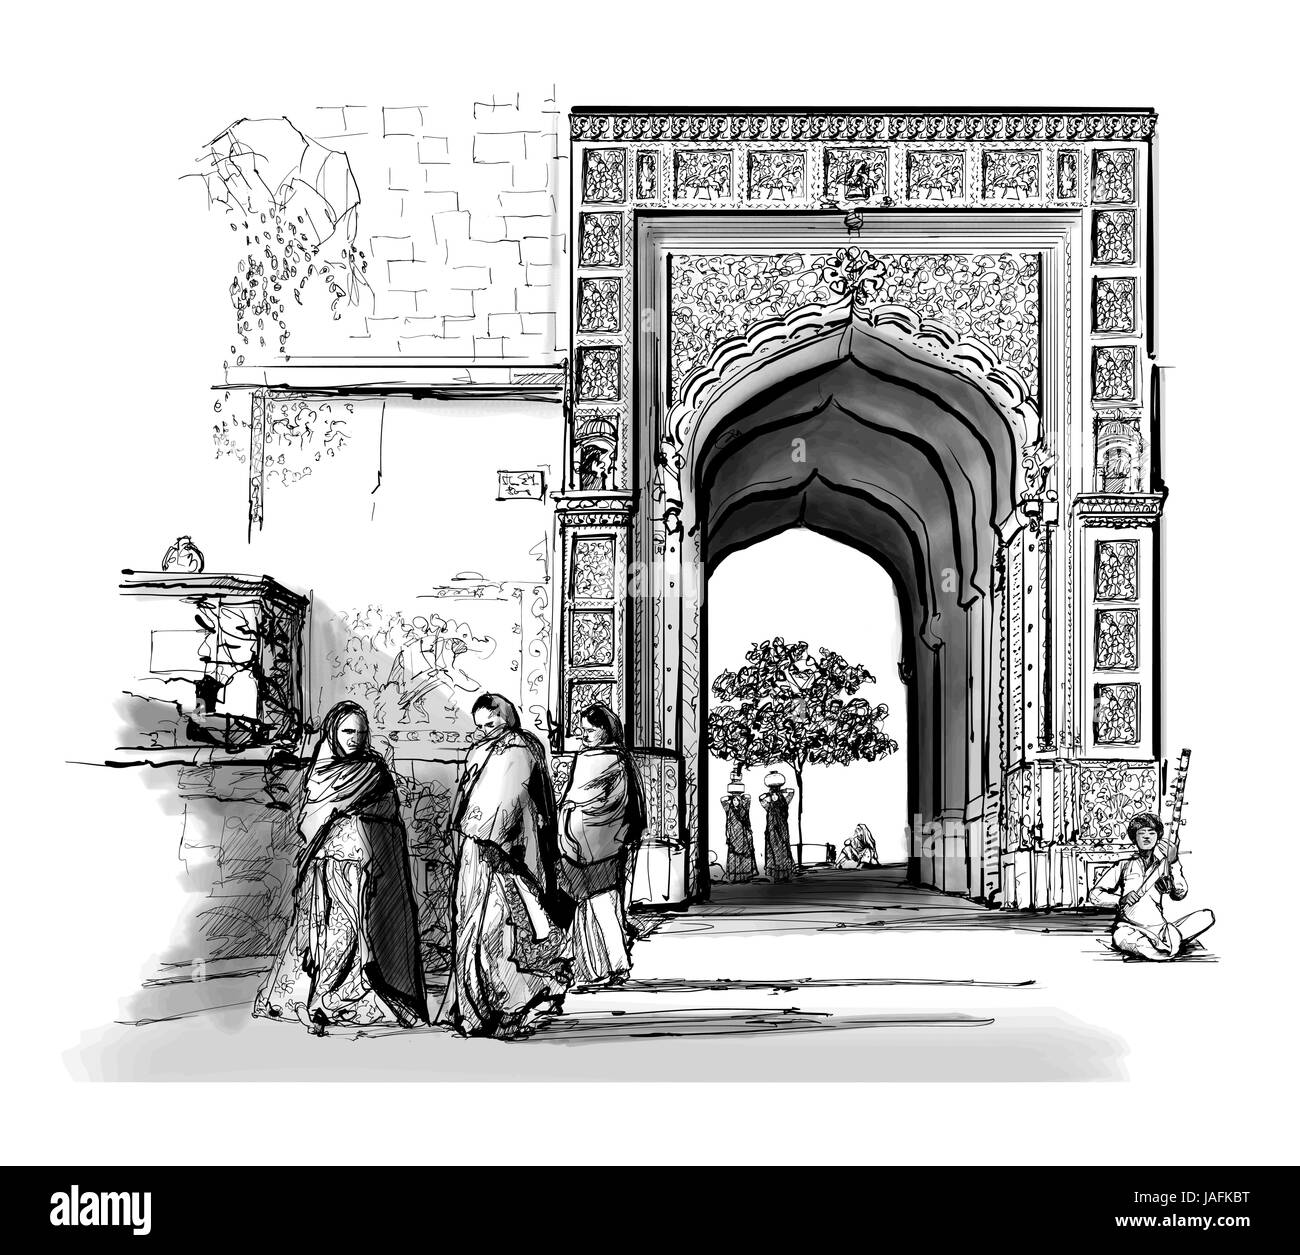 India Rajasthan - Jaisalmer - illustrazione vettoriale Illustrazione Vettoriale